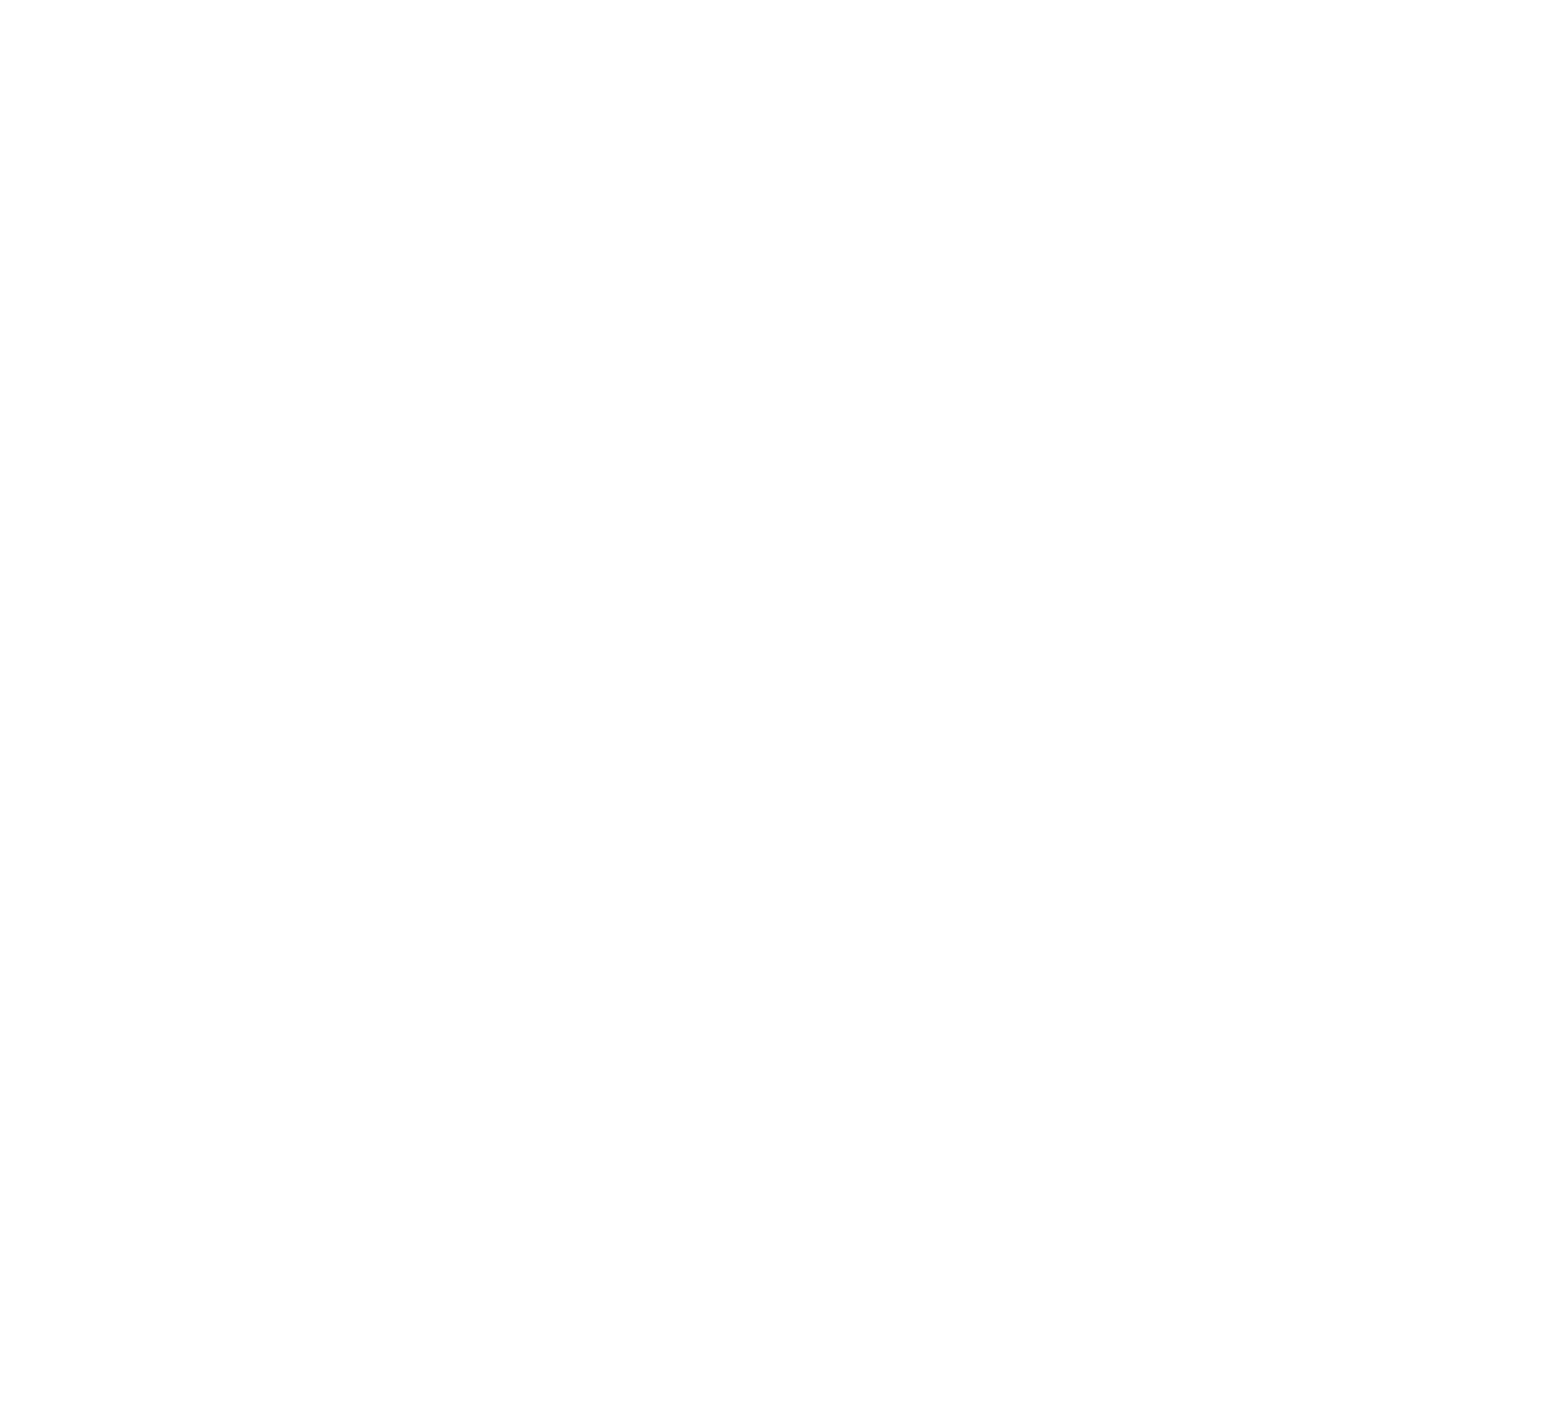 Momentus logo large for dark backgrounds (transparent PNG)